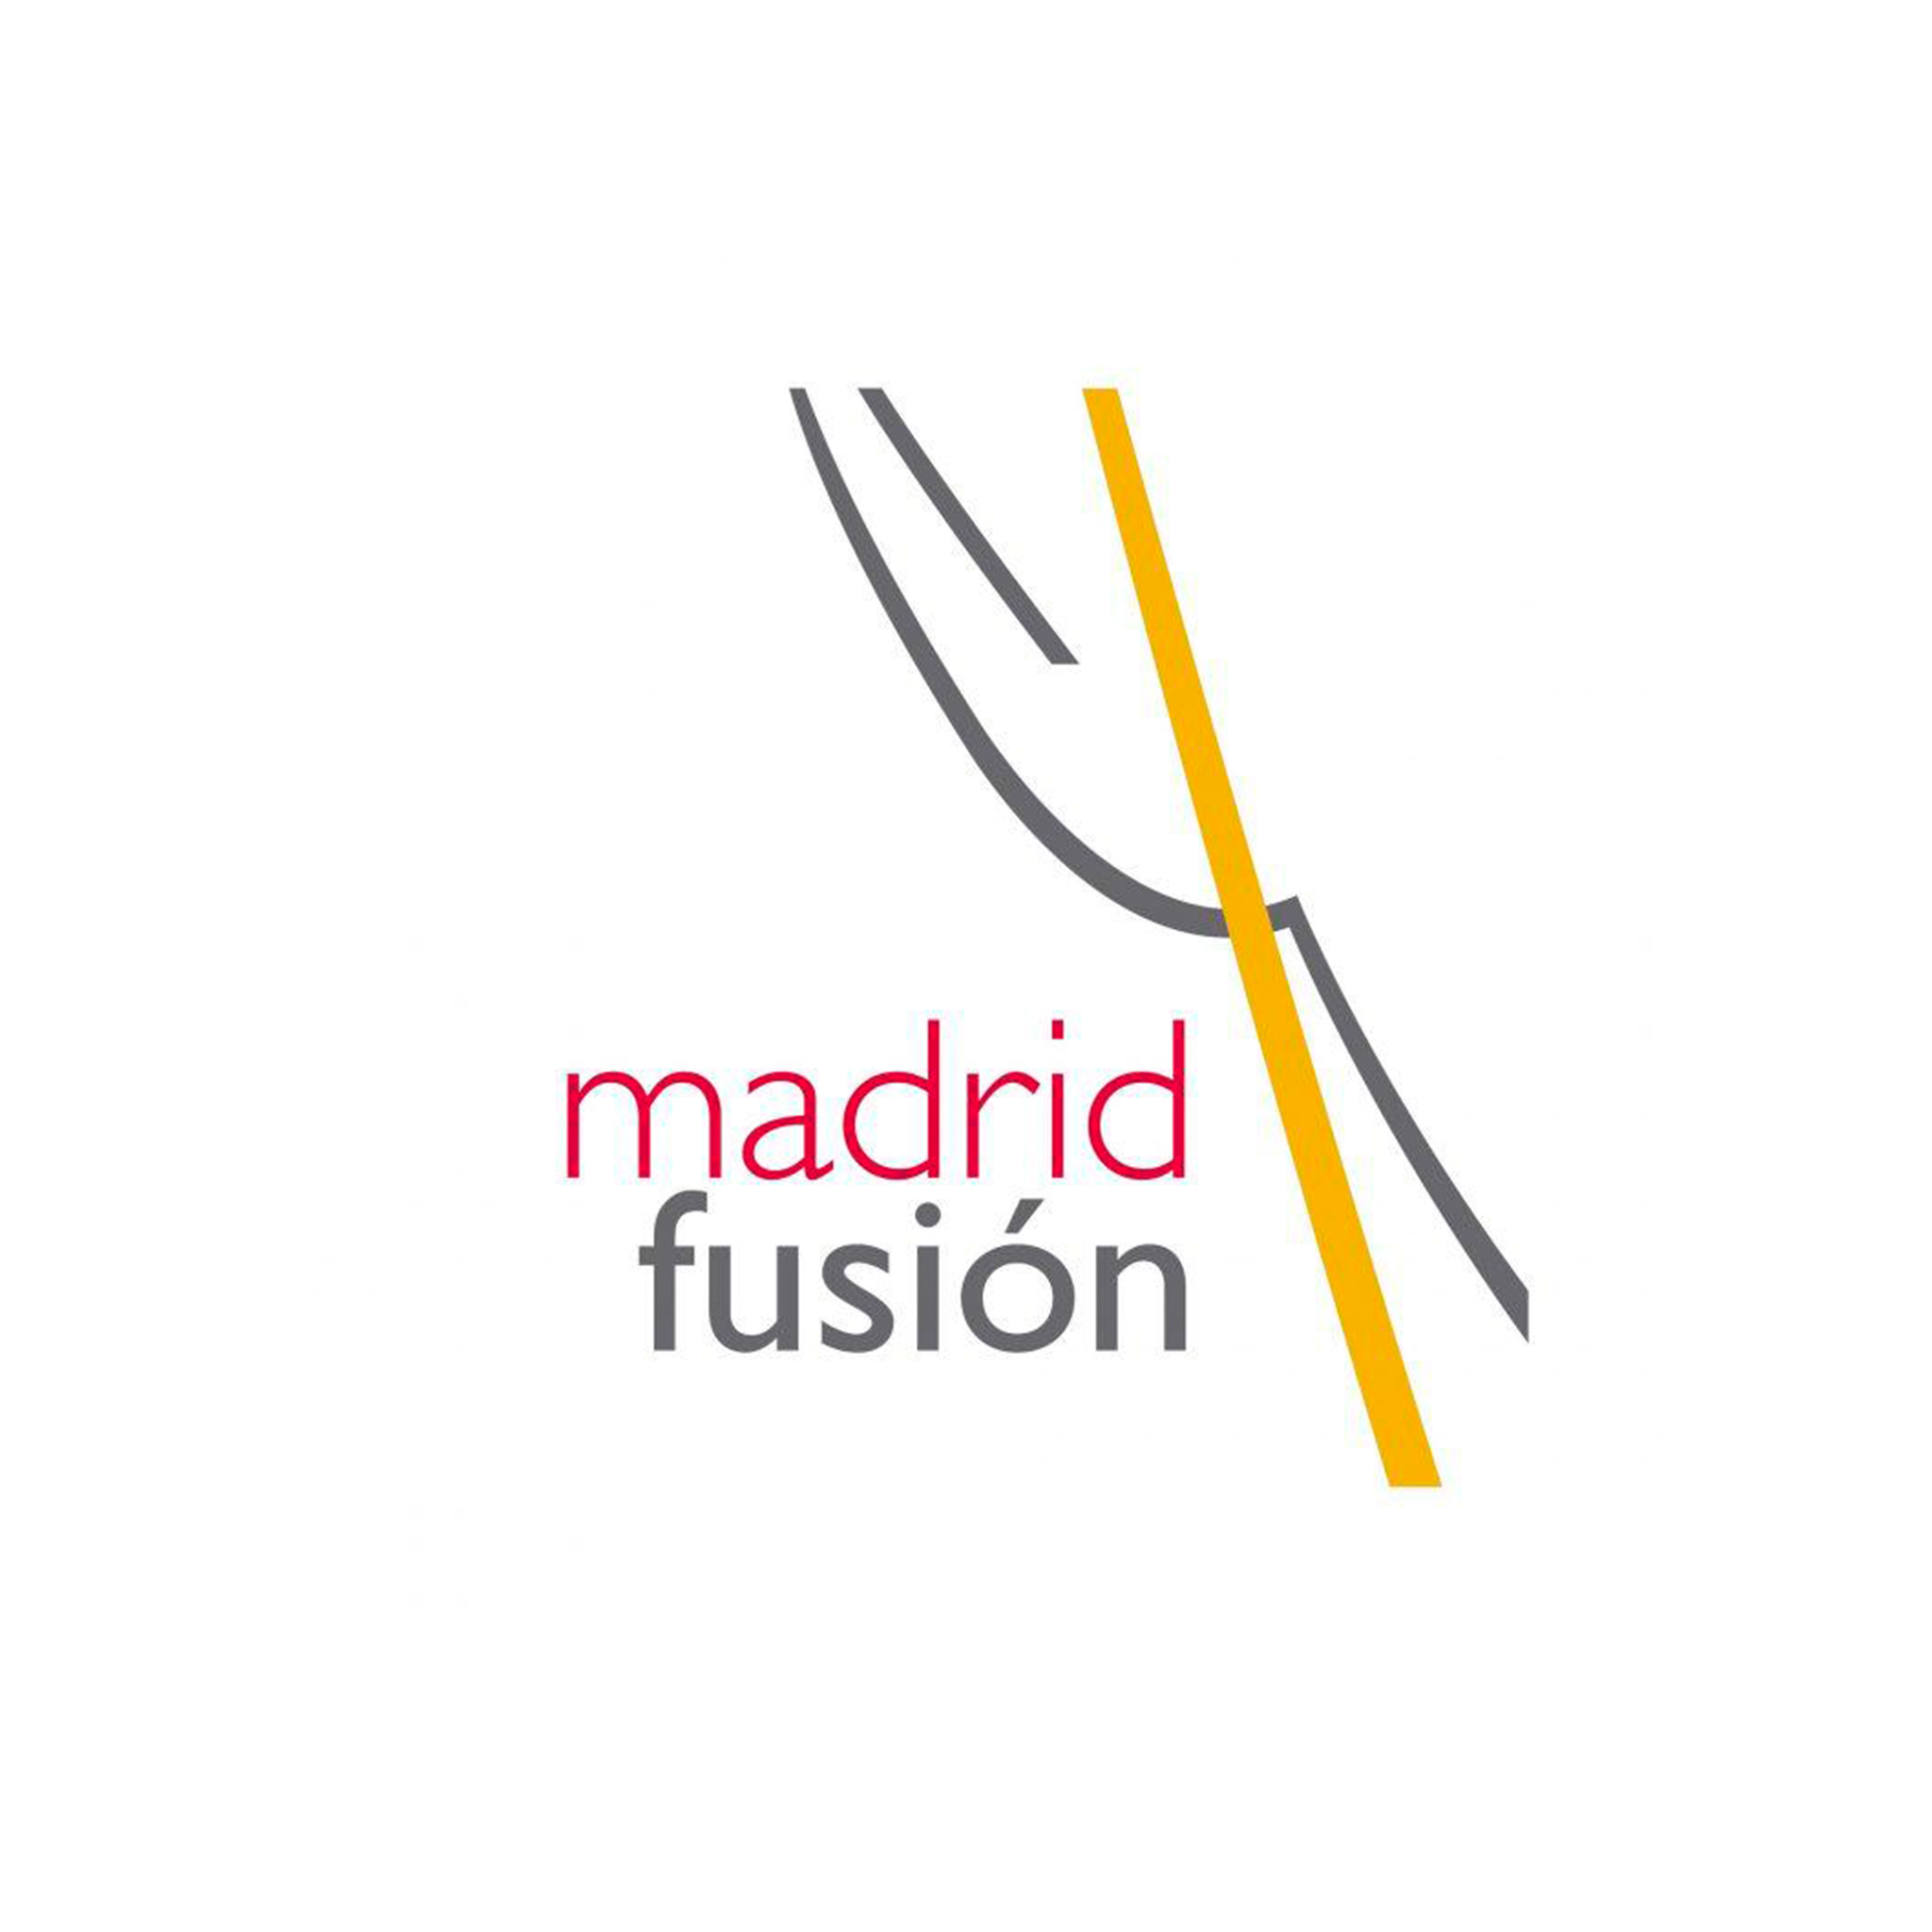 MADRID_FUSION